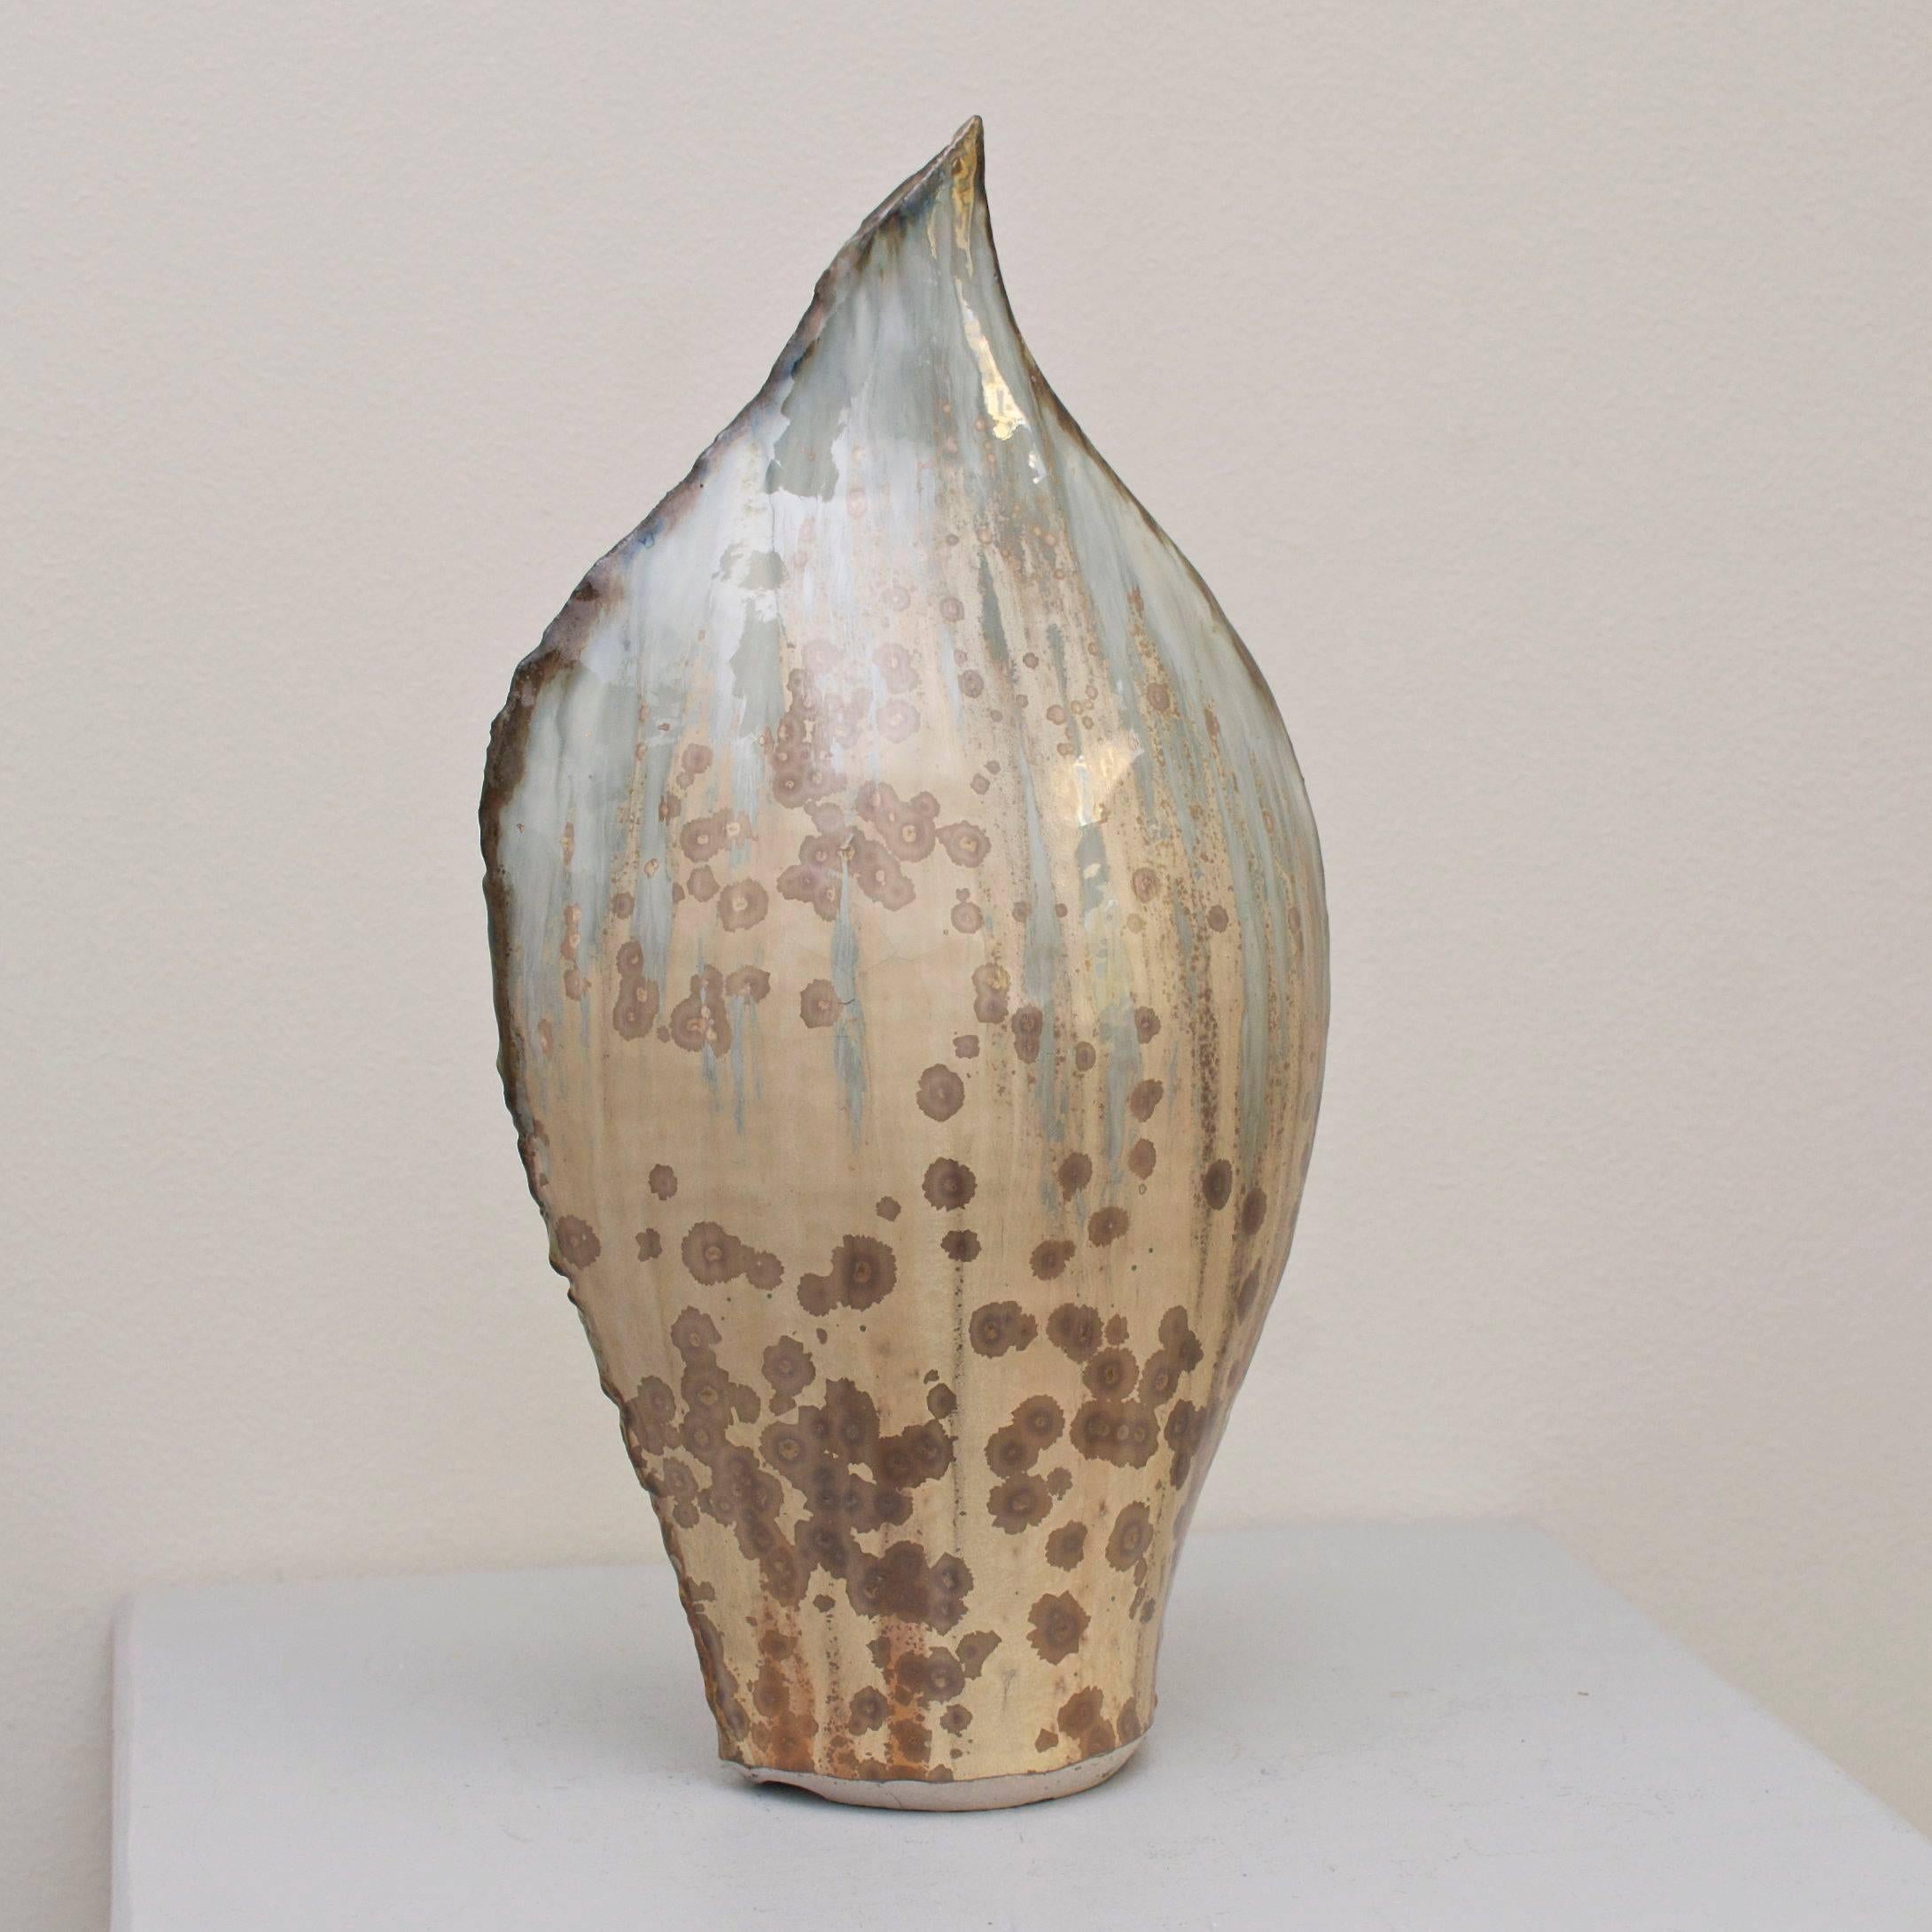 Erik Plöen earthenware vase Norway, 1970s. Polychrome glaze in Greyish blue, sand and brown shades. Marked under base 